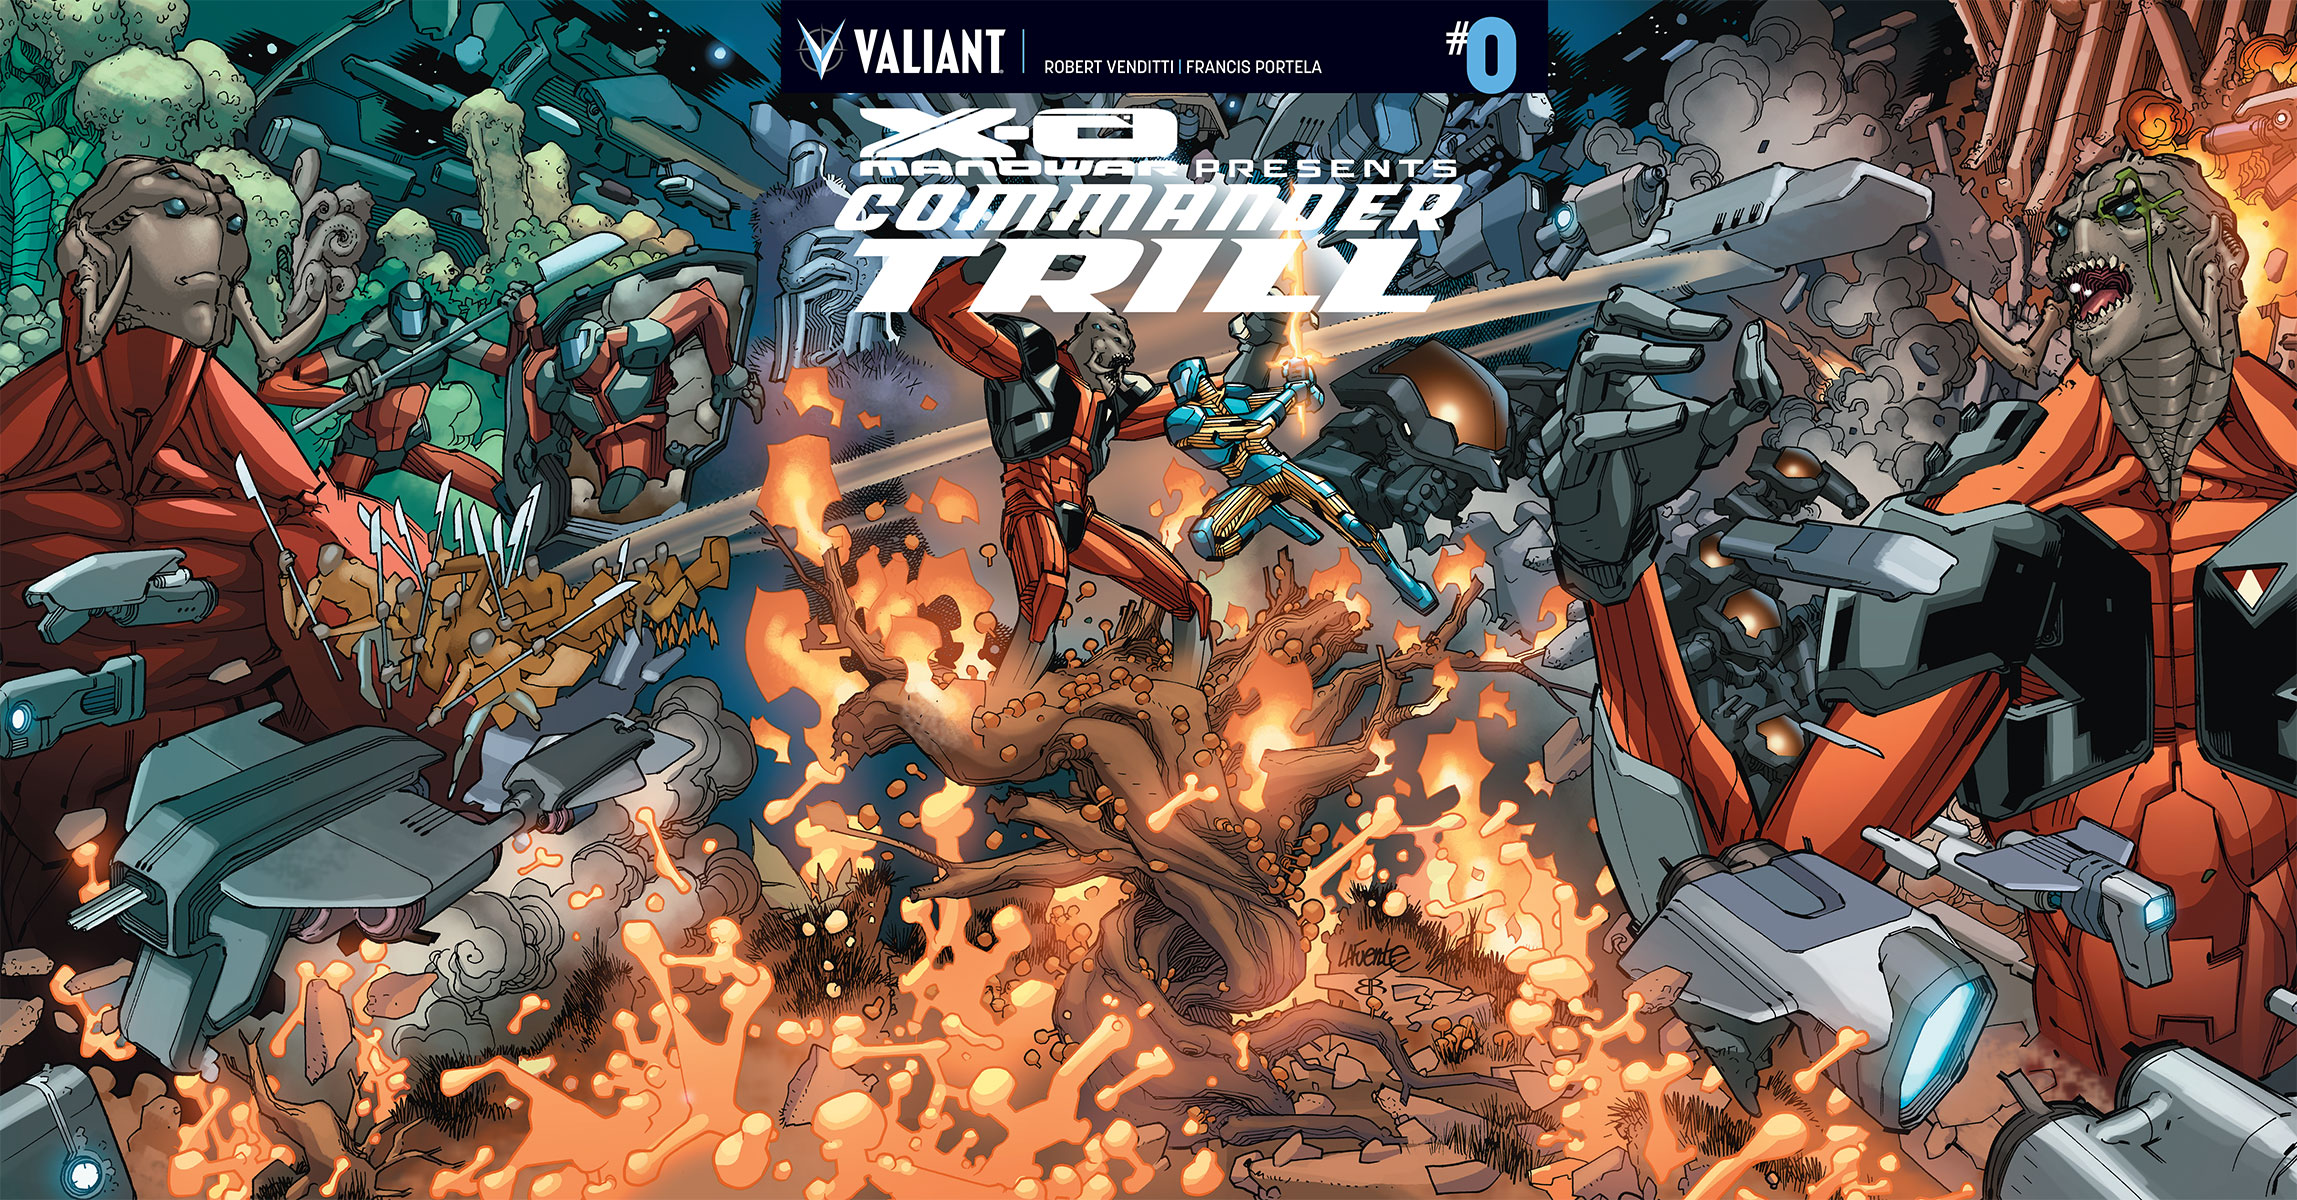 December 2nd Valiant Previews: X-O Manowar: Commander Trill #0 - NerdSpan